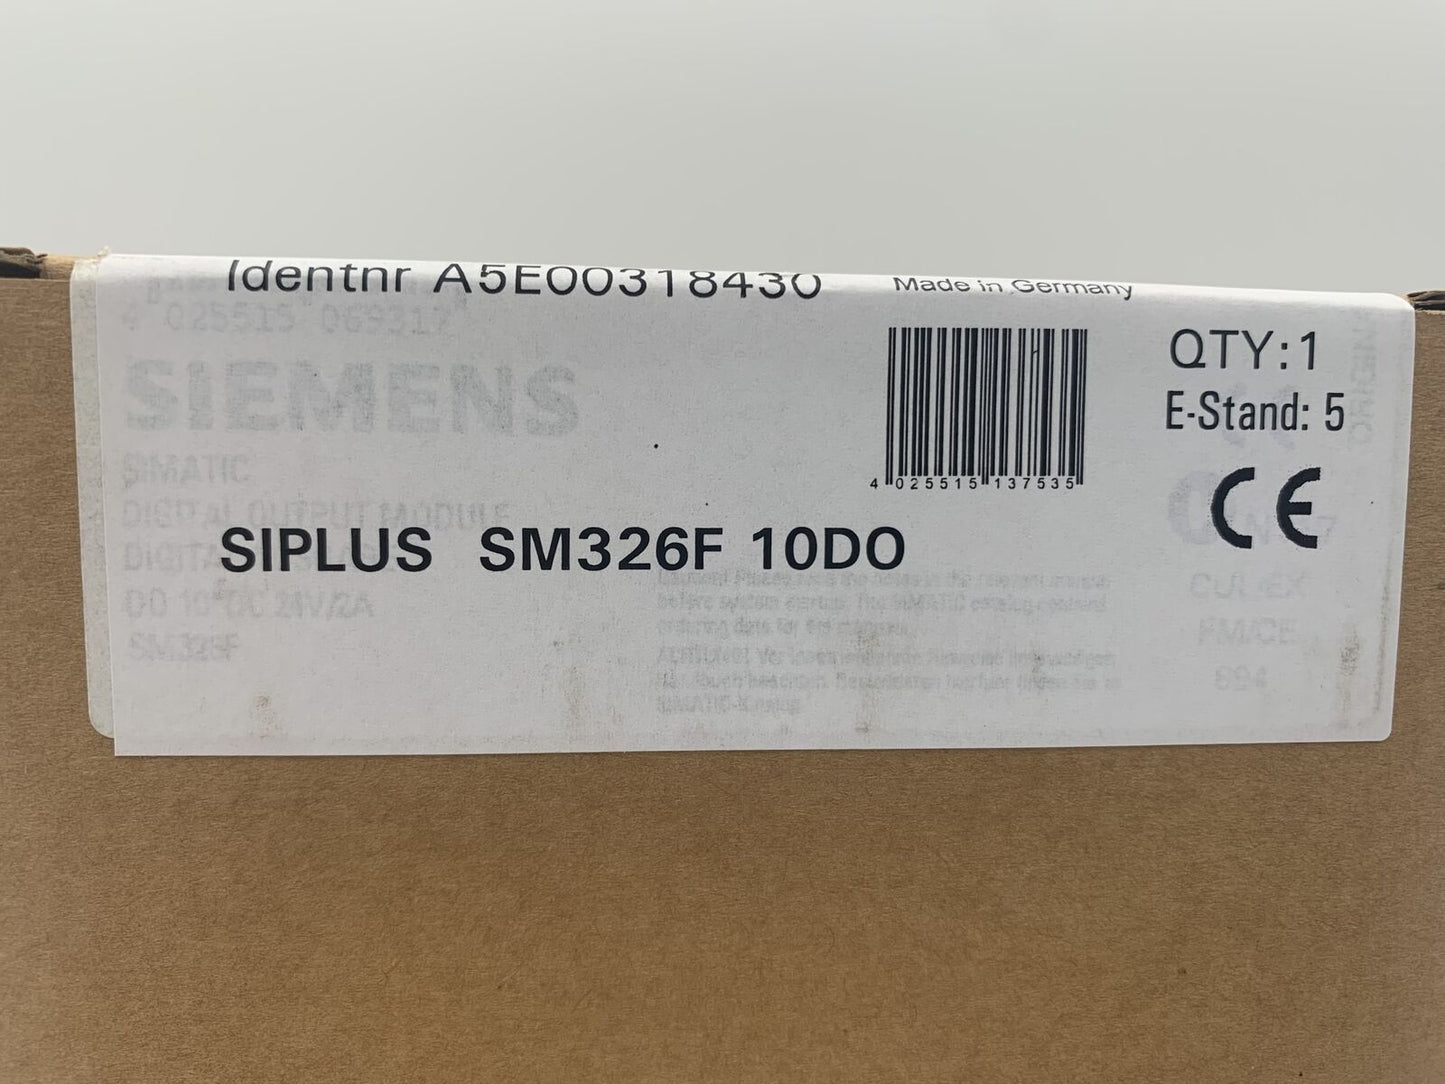 Siemens 6AG1326-2BF01-2AB0